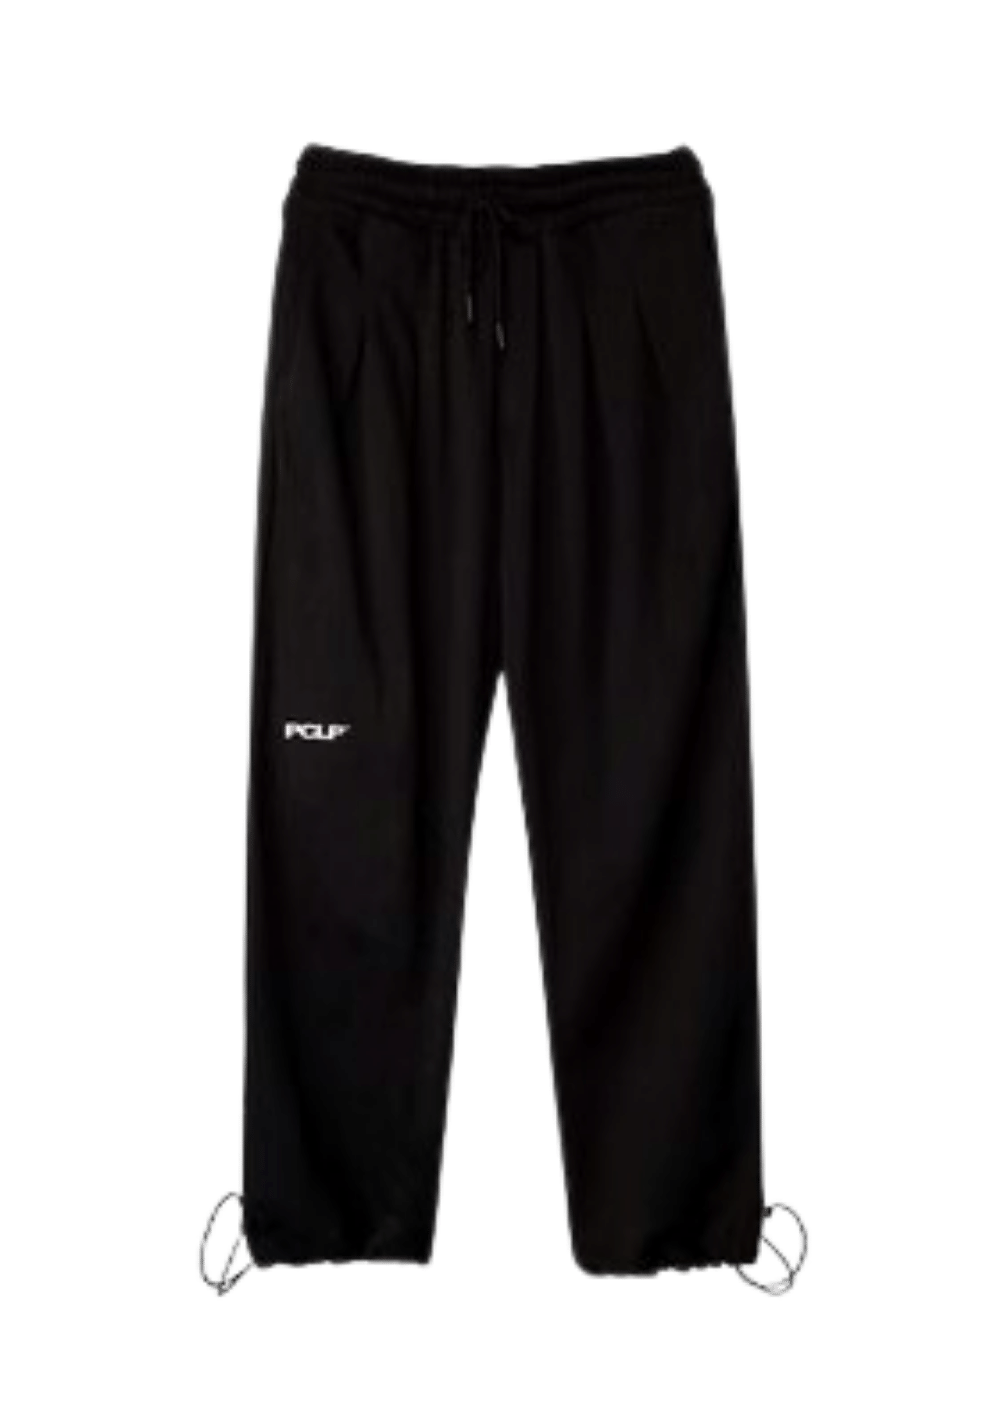 Tapered Knit Sweatpants - PSYLOS 1, Tapered Knit Sweatpants, Pants, PCLP, PSYLOS 1